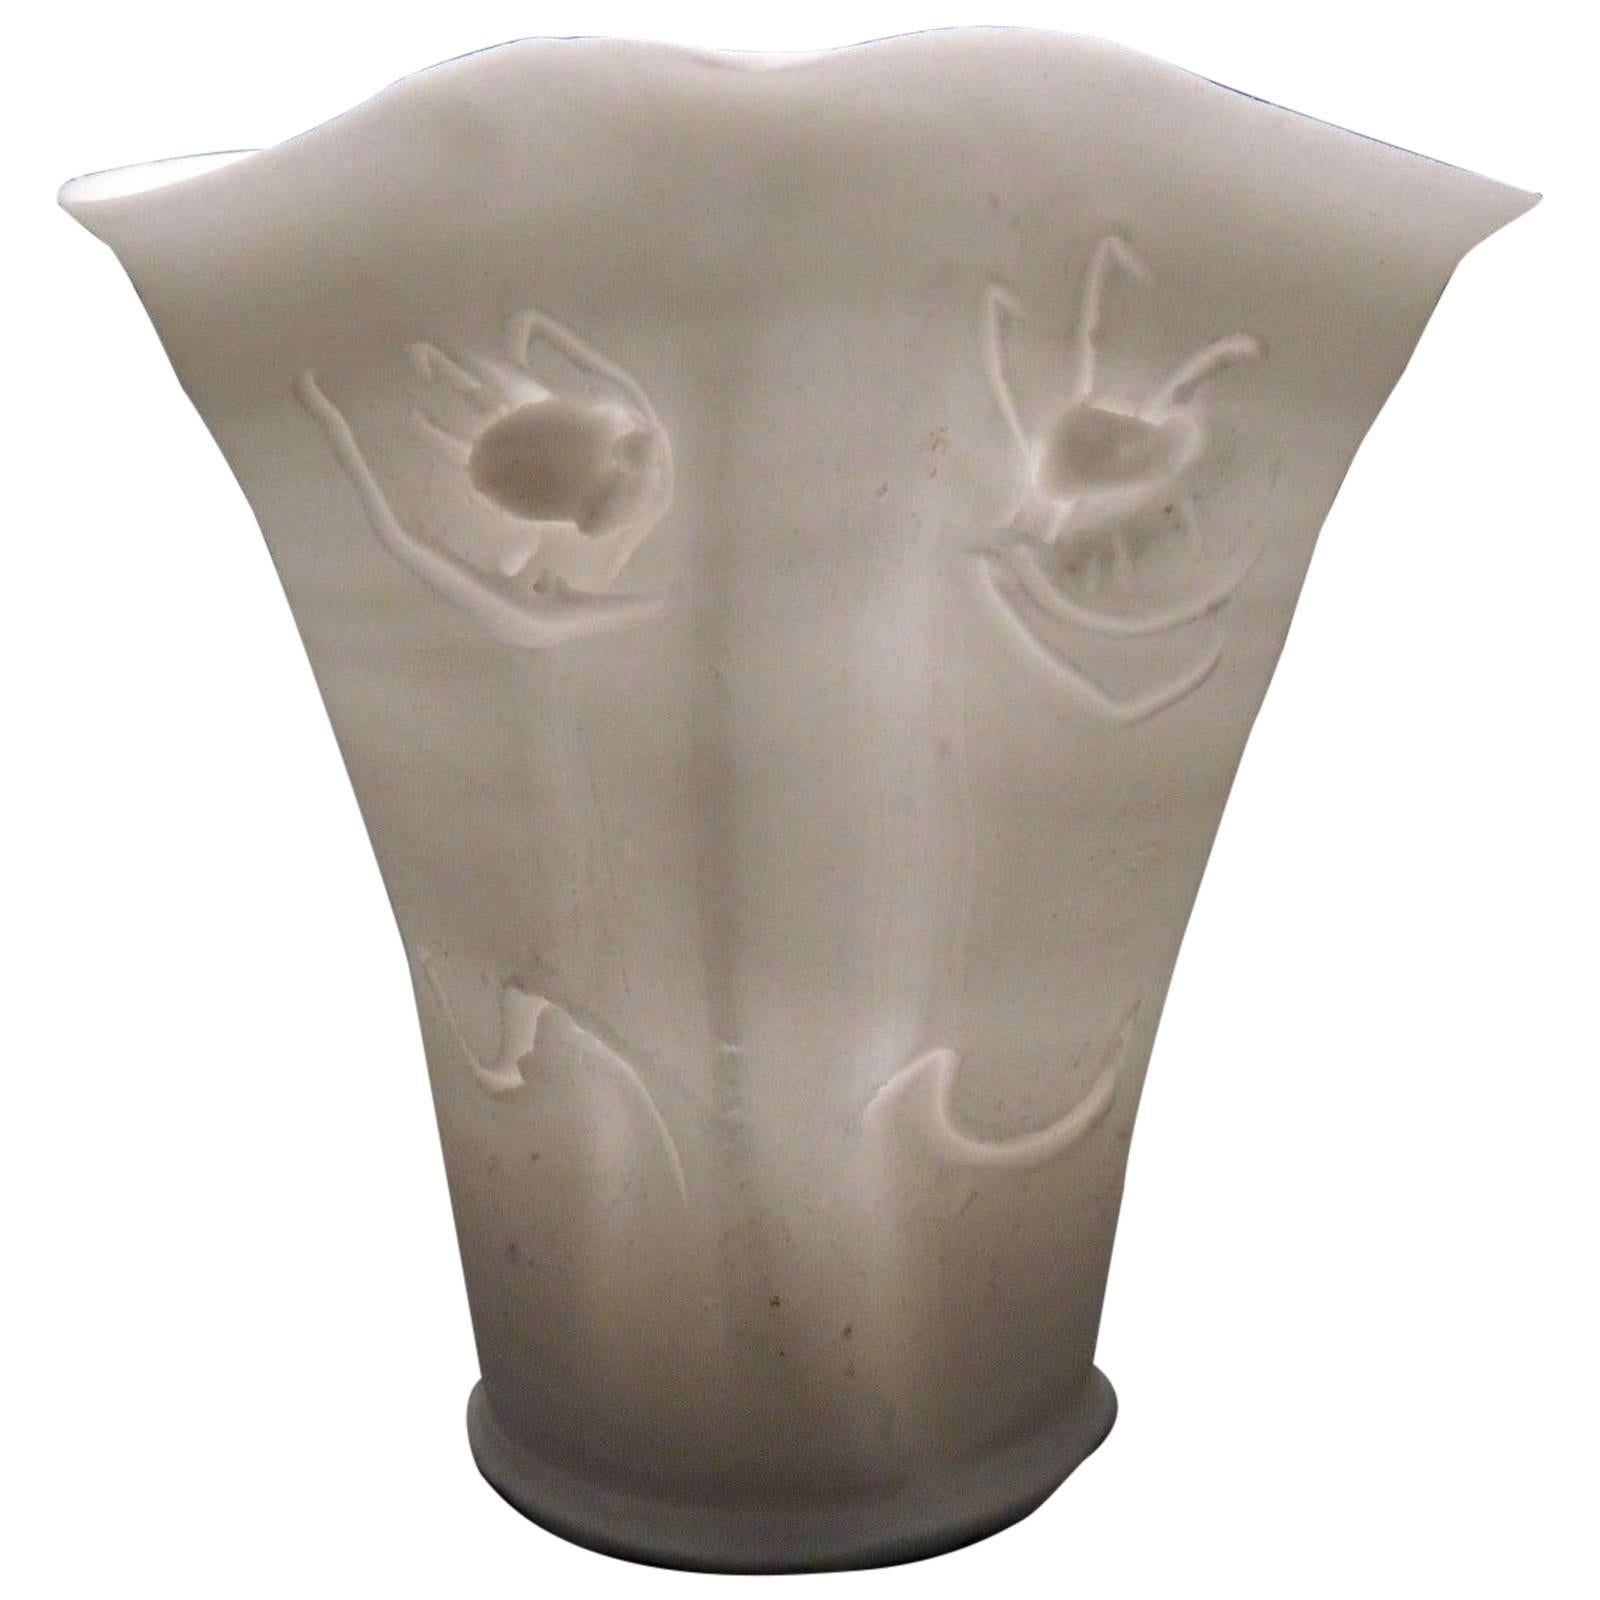 Signed Light Gatherer Porcelain Vase with a Face by Rudolf "Rudy" Staffel